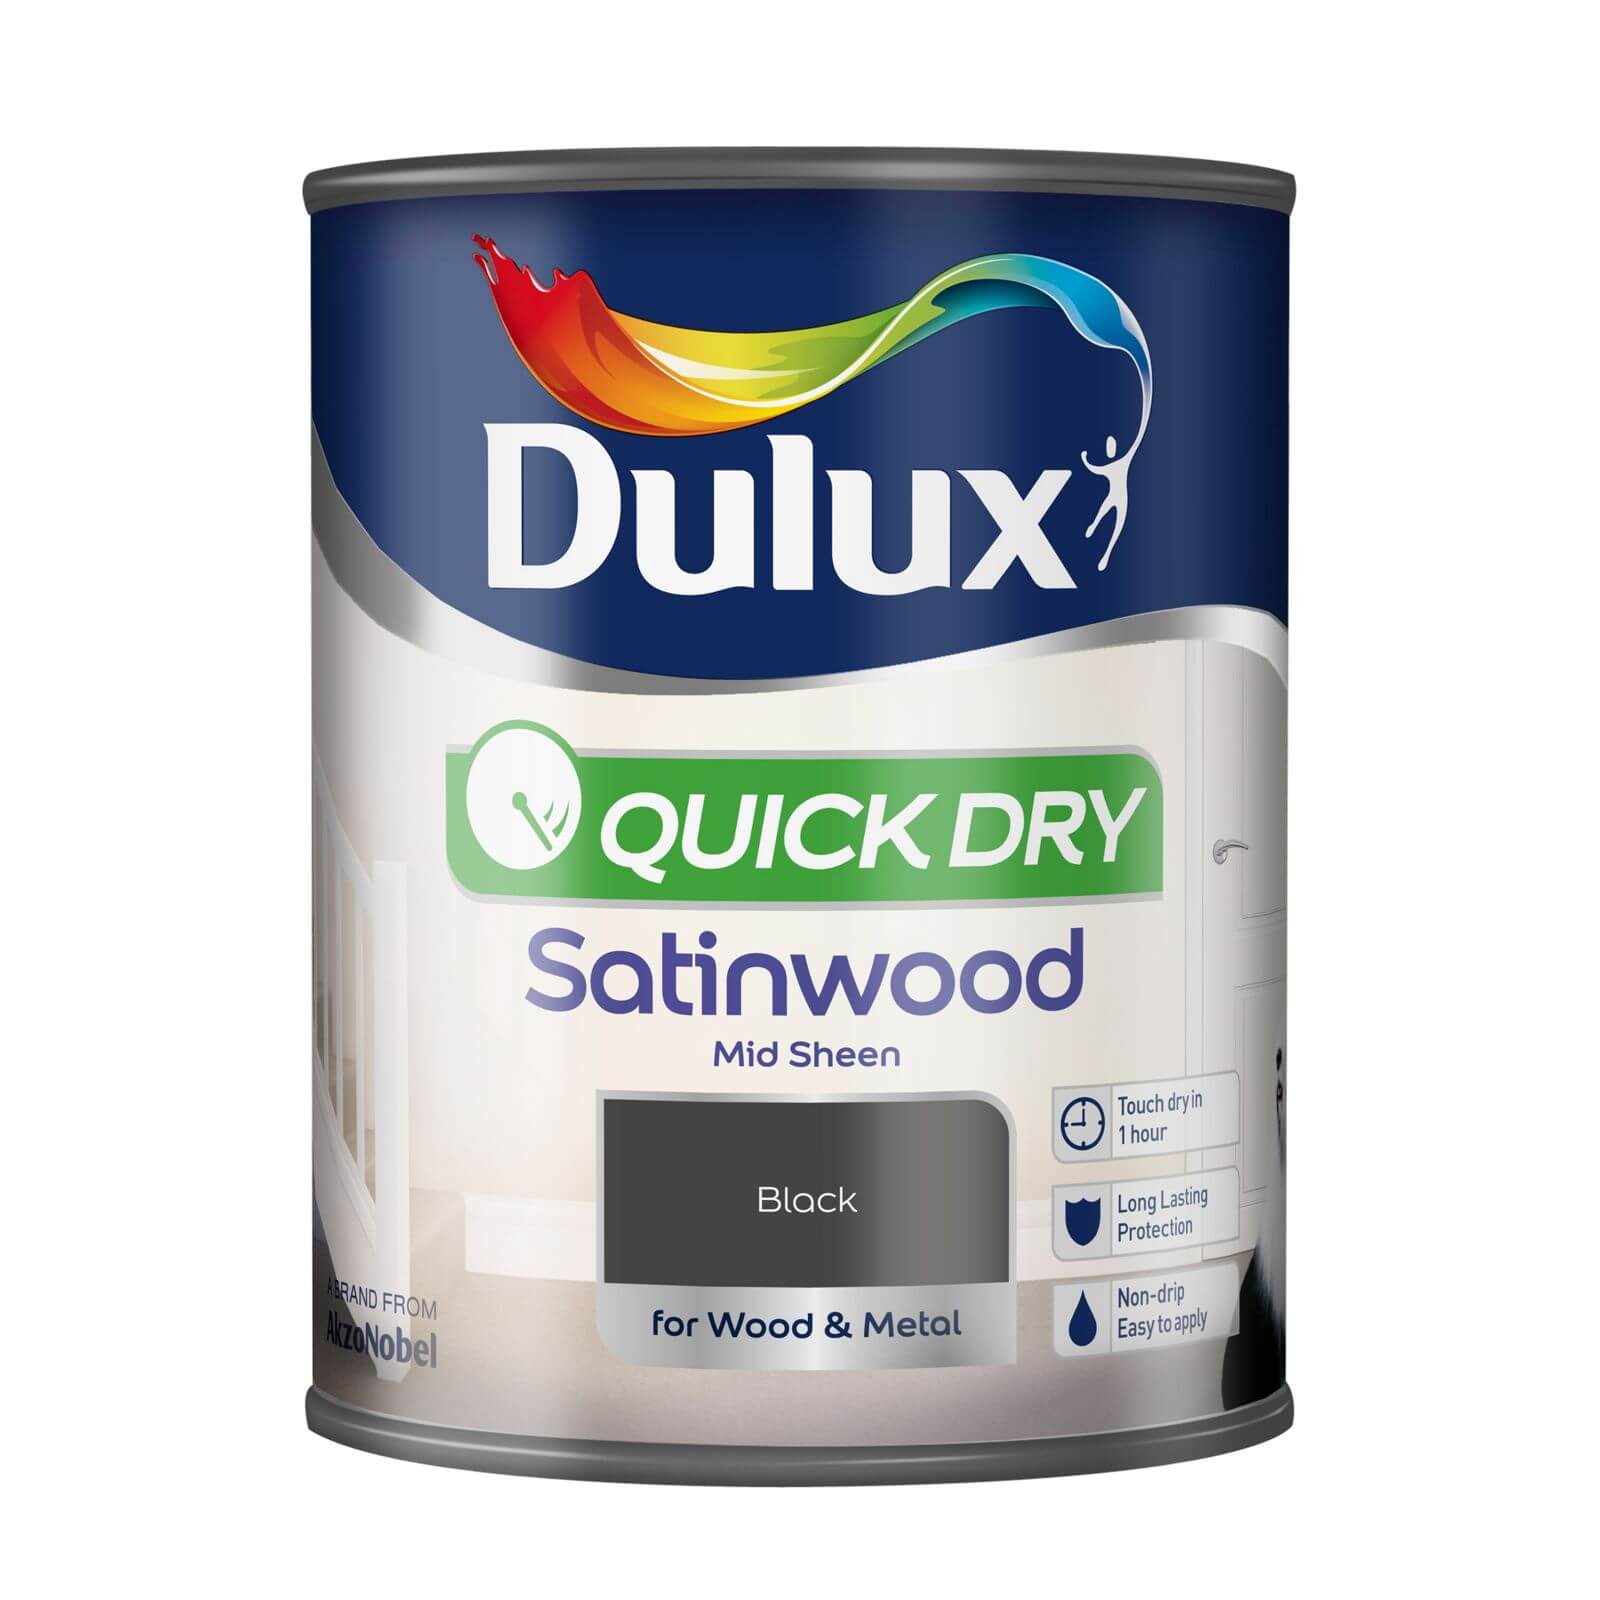 Dulux Quick Dry Satinwood Black - 750ml